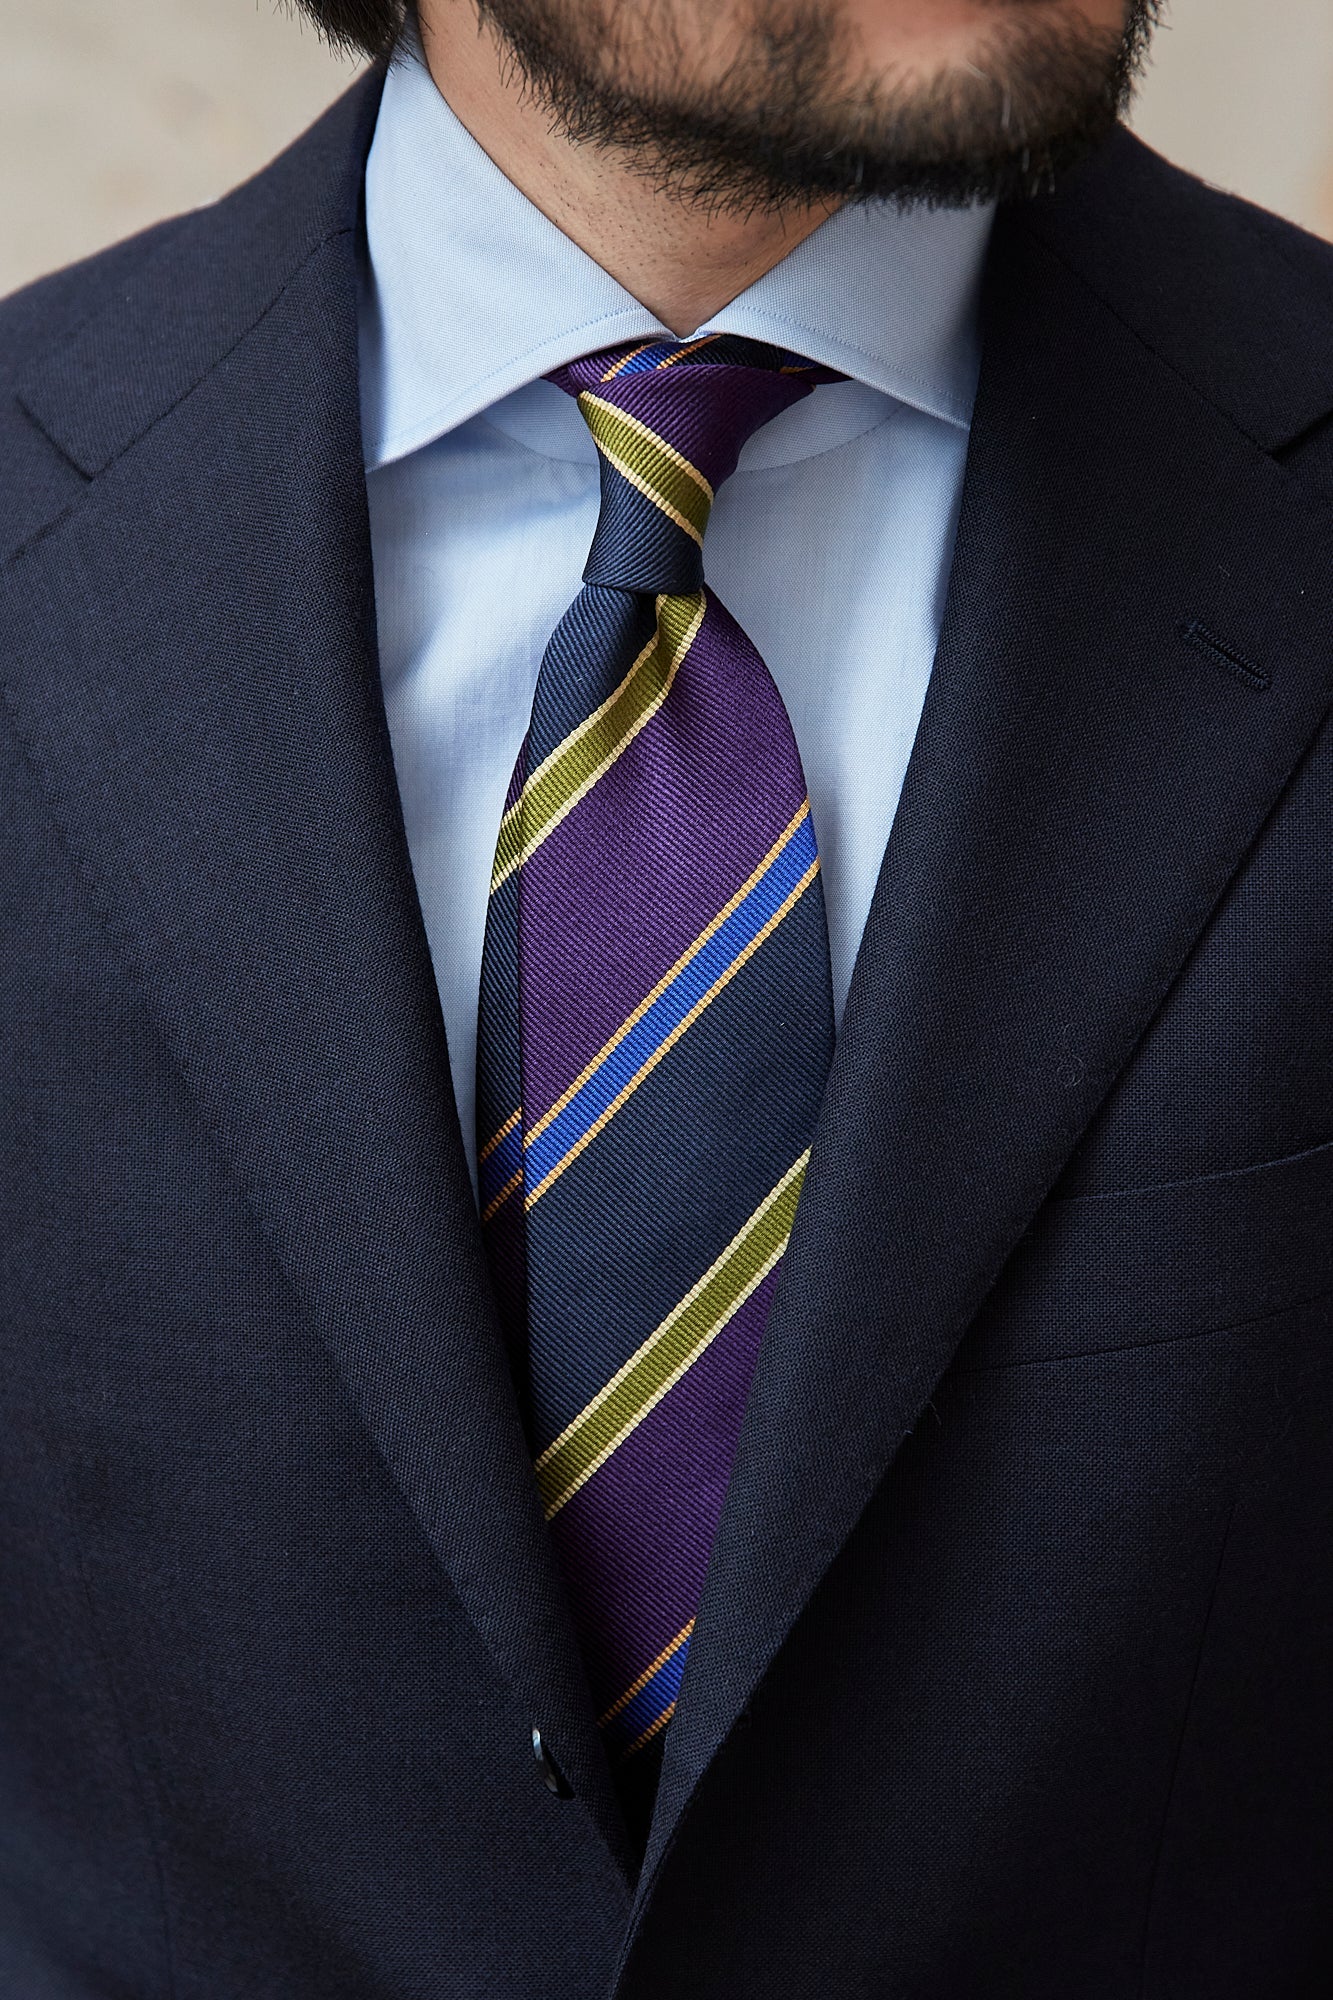 Drake's Purple/Navy/Green/Blue Stripe Silk Tie